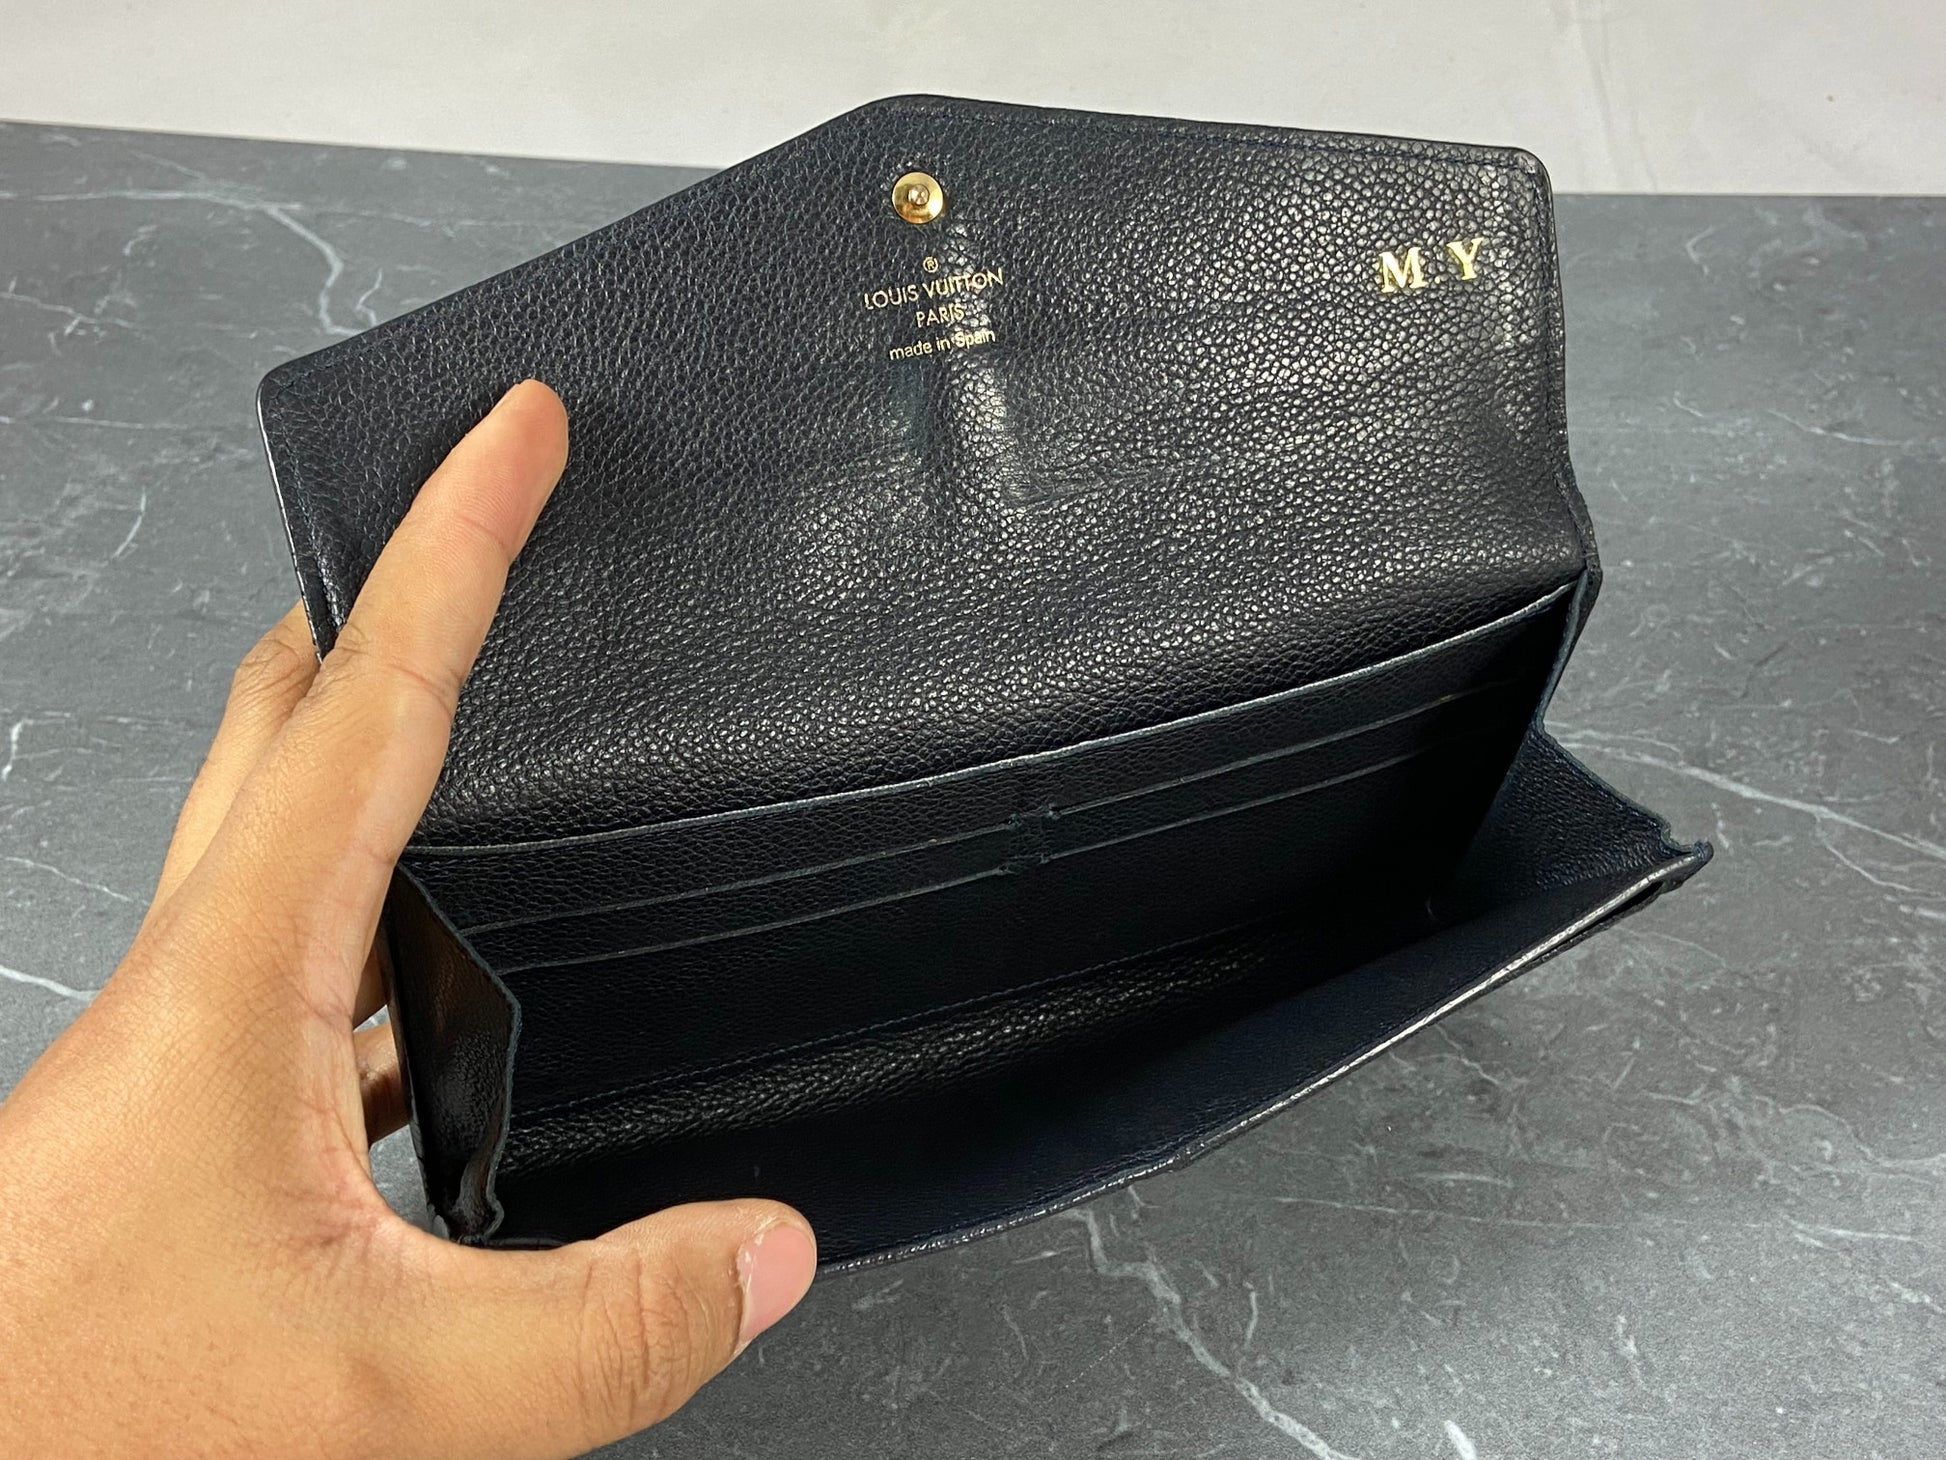 LOUIS VUITTON Empreinte Compact Curieuse Wallet Black 98921